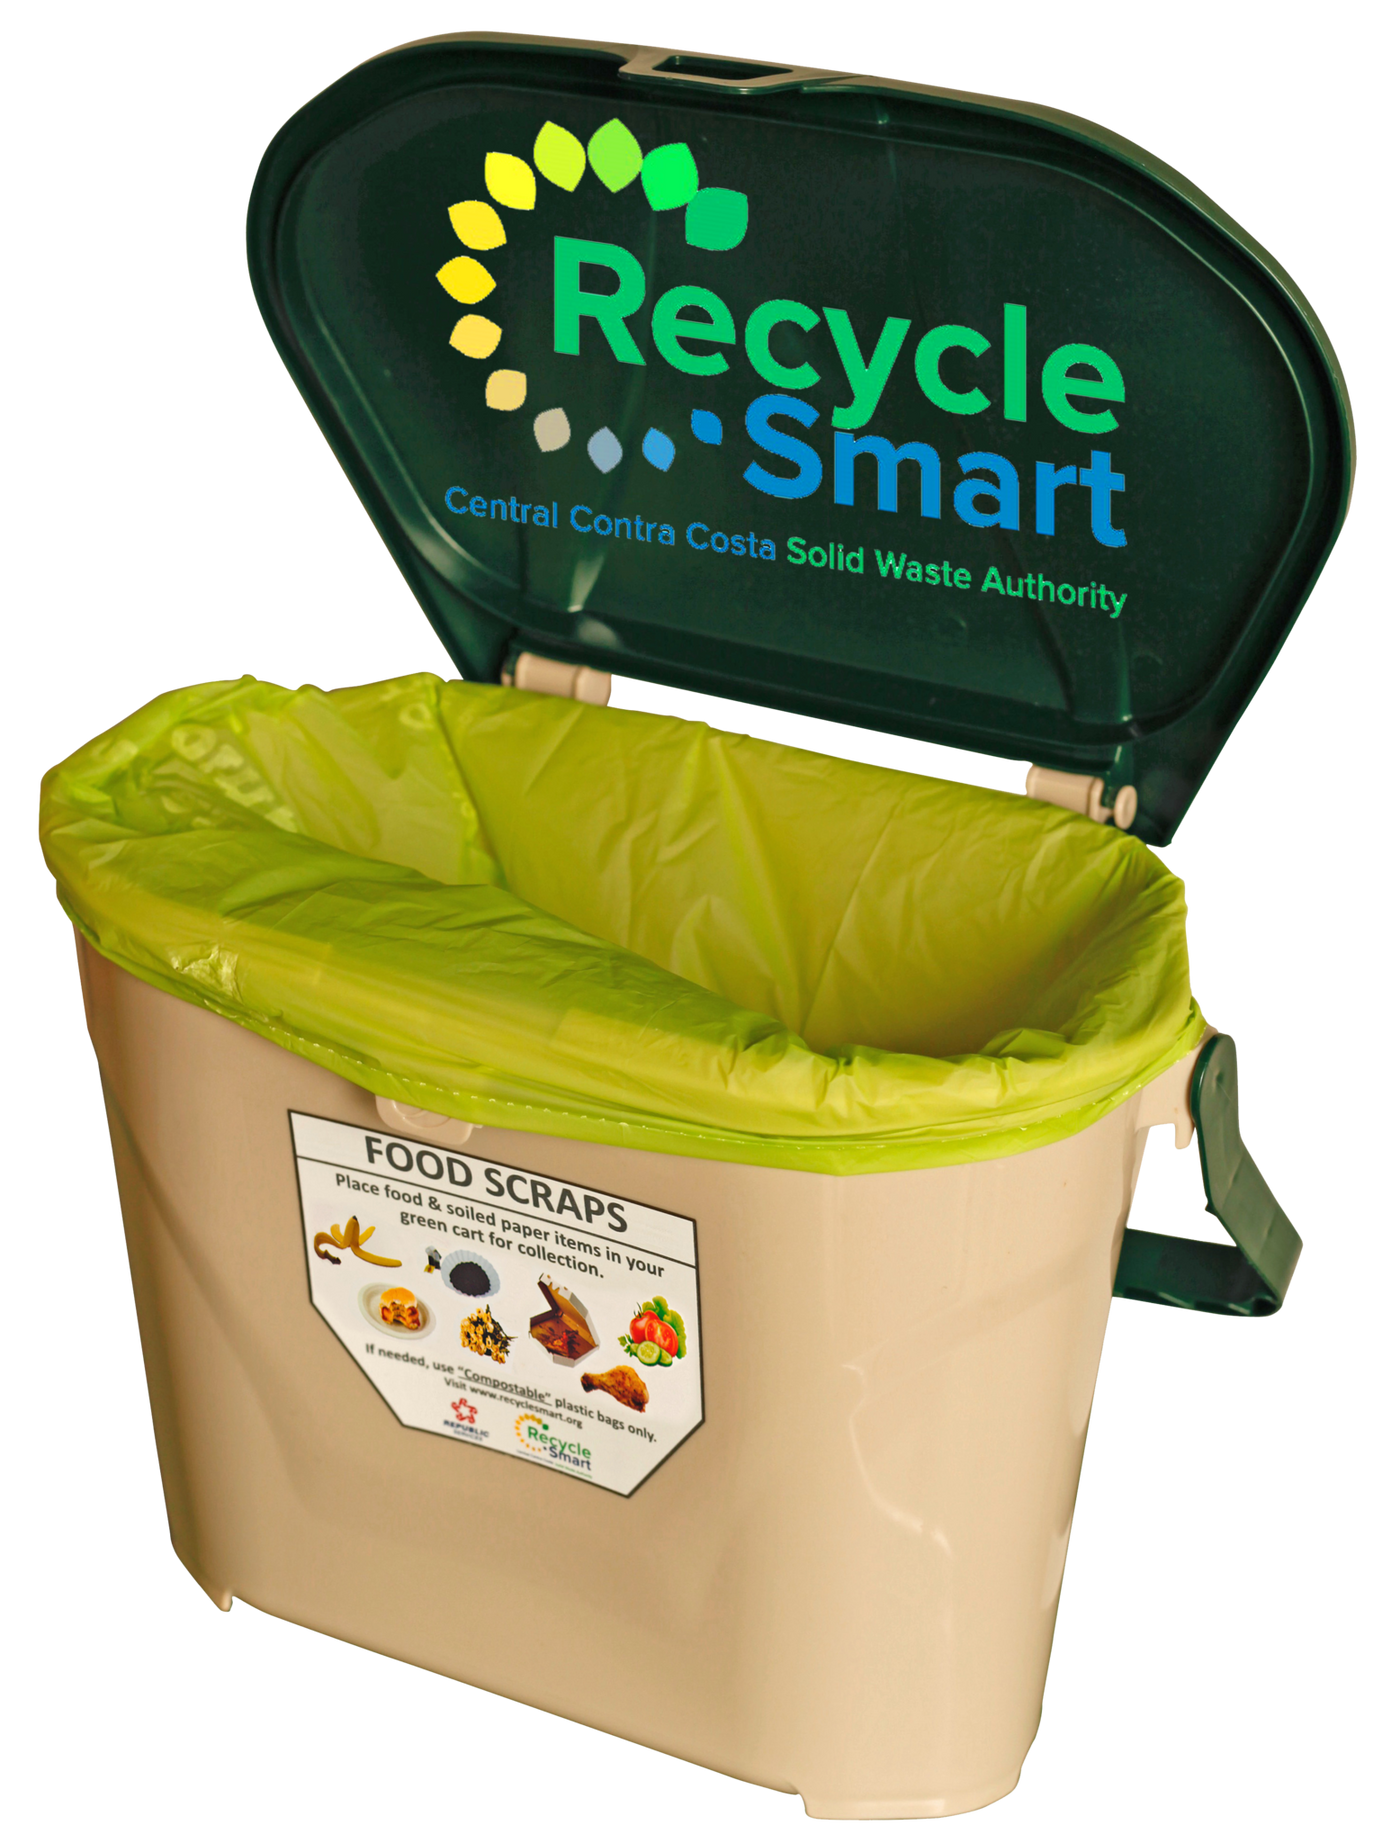 Flextrash, Small, sustainable waste bin